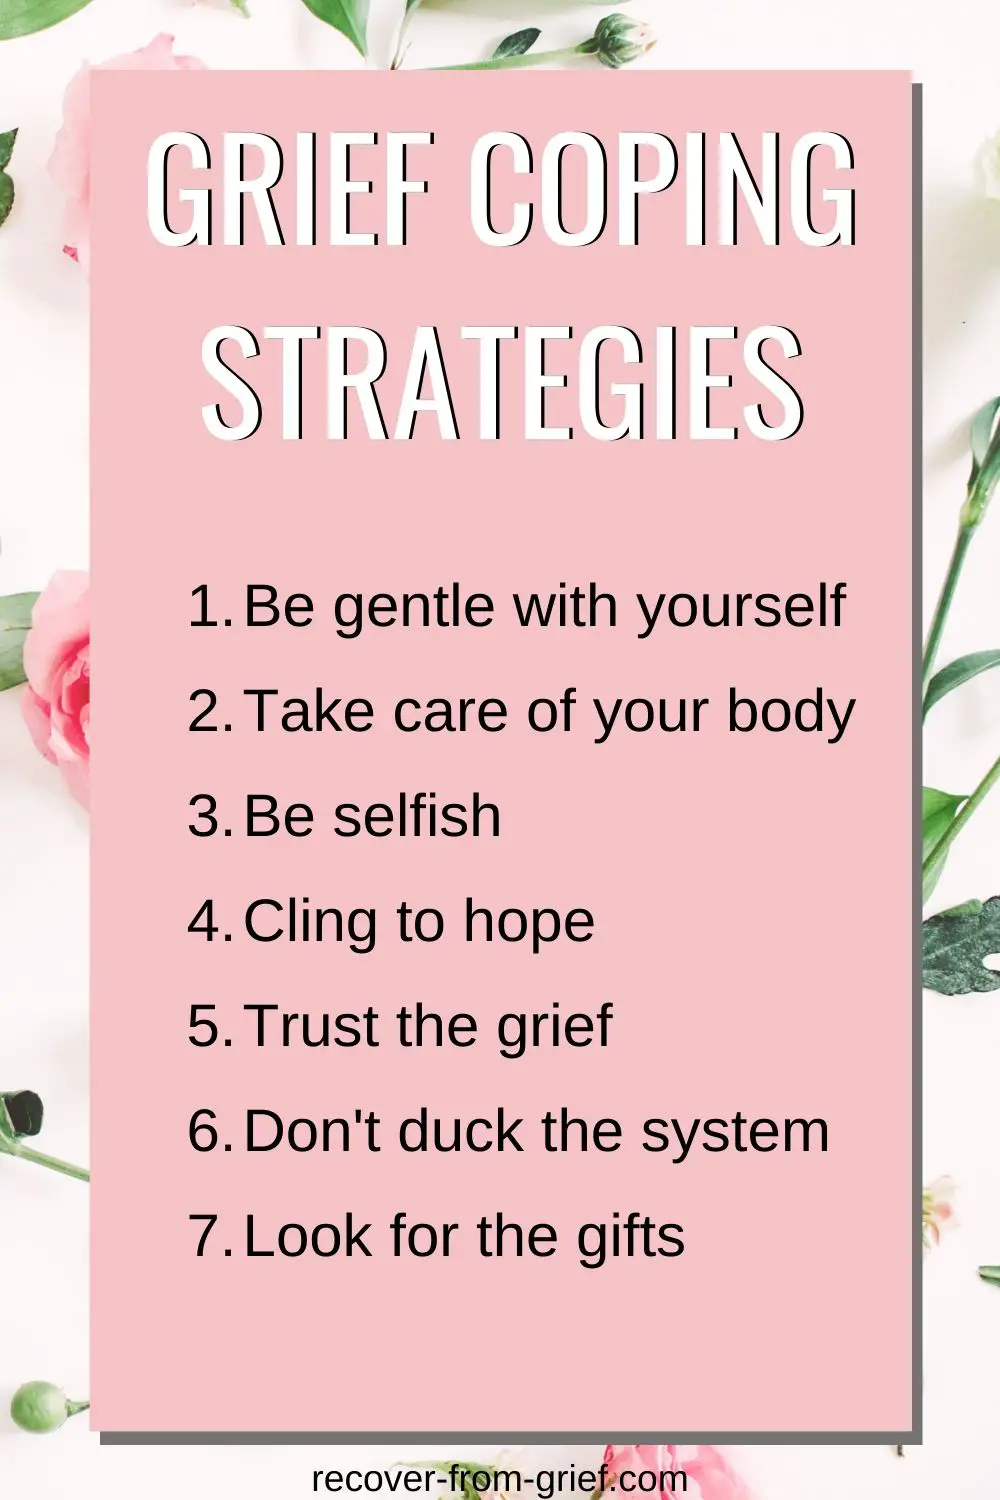 Grief coping strategies